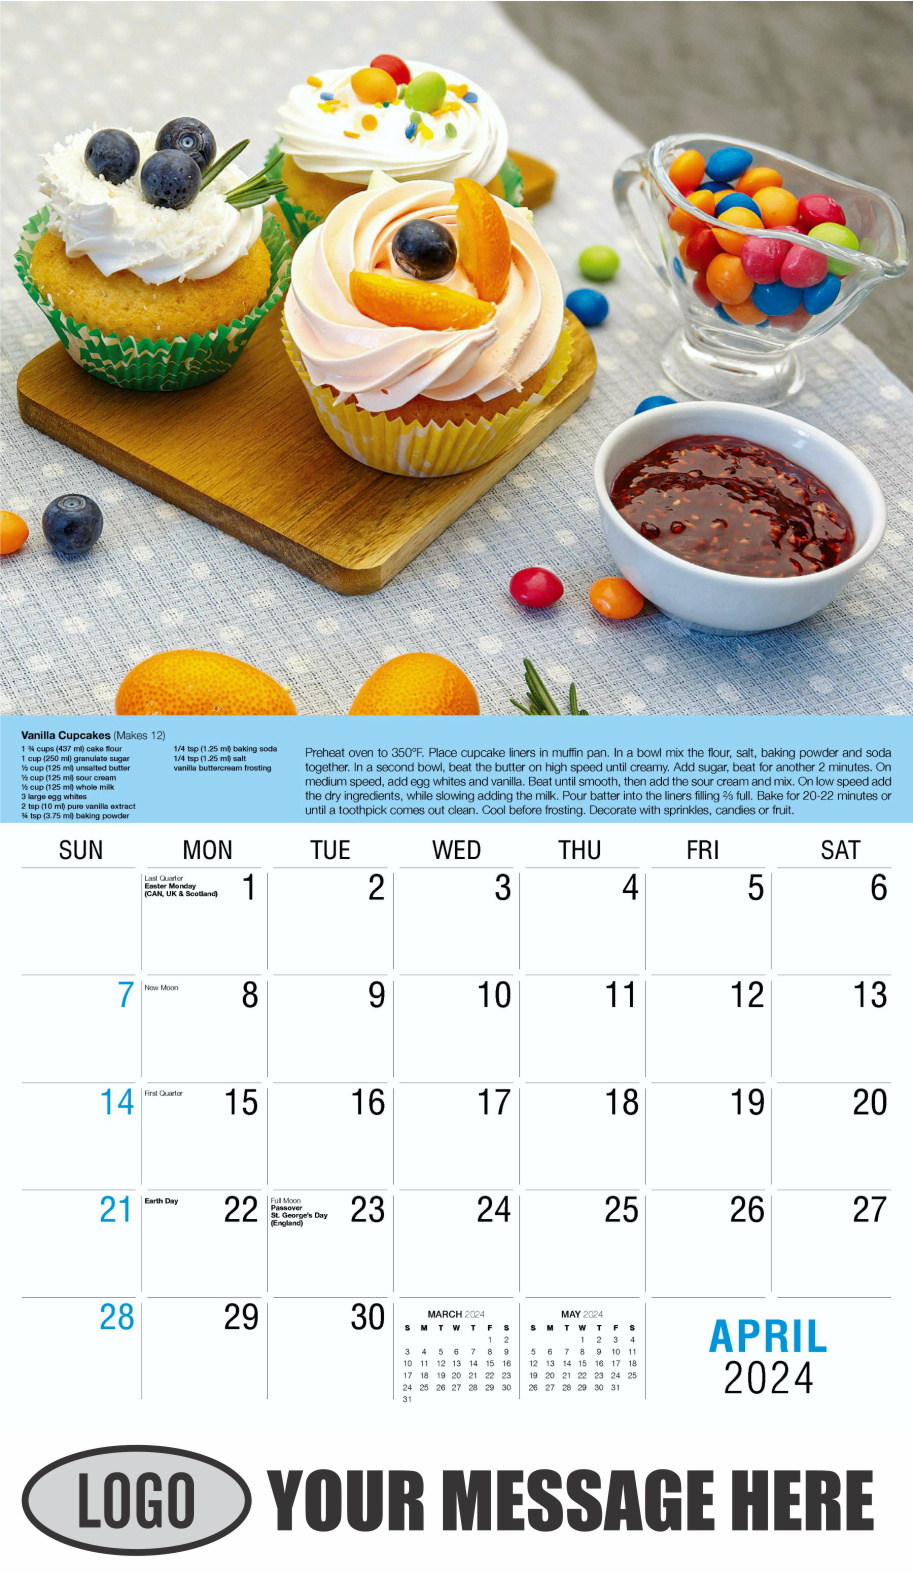 Recipes 2024 Business Promotional Calendar - April